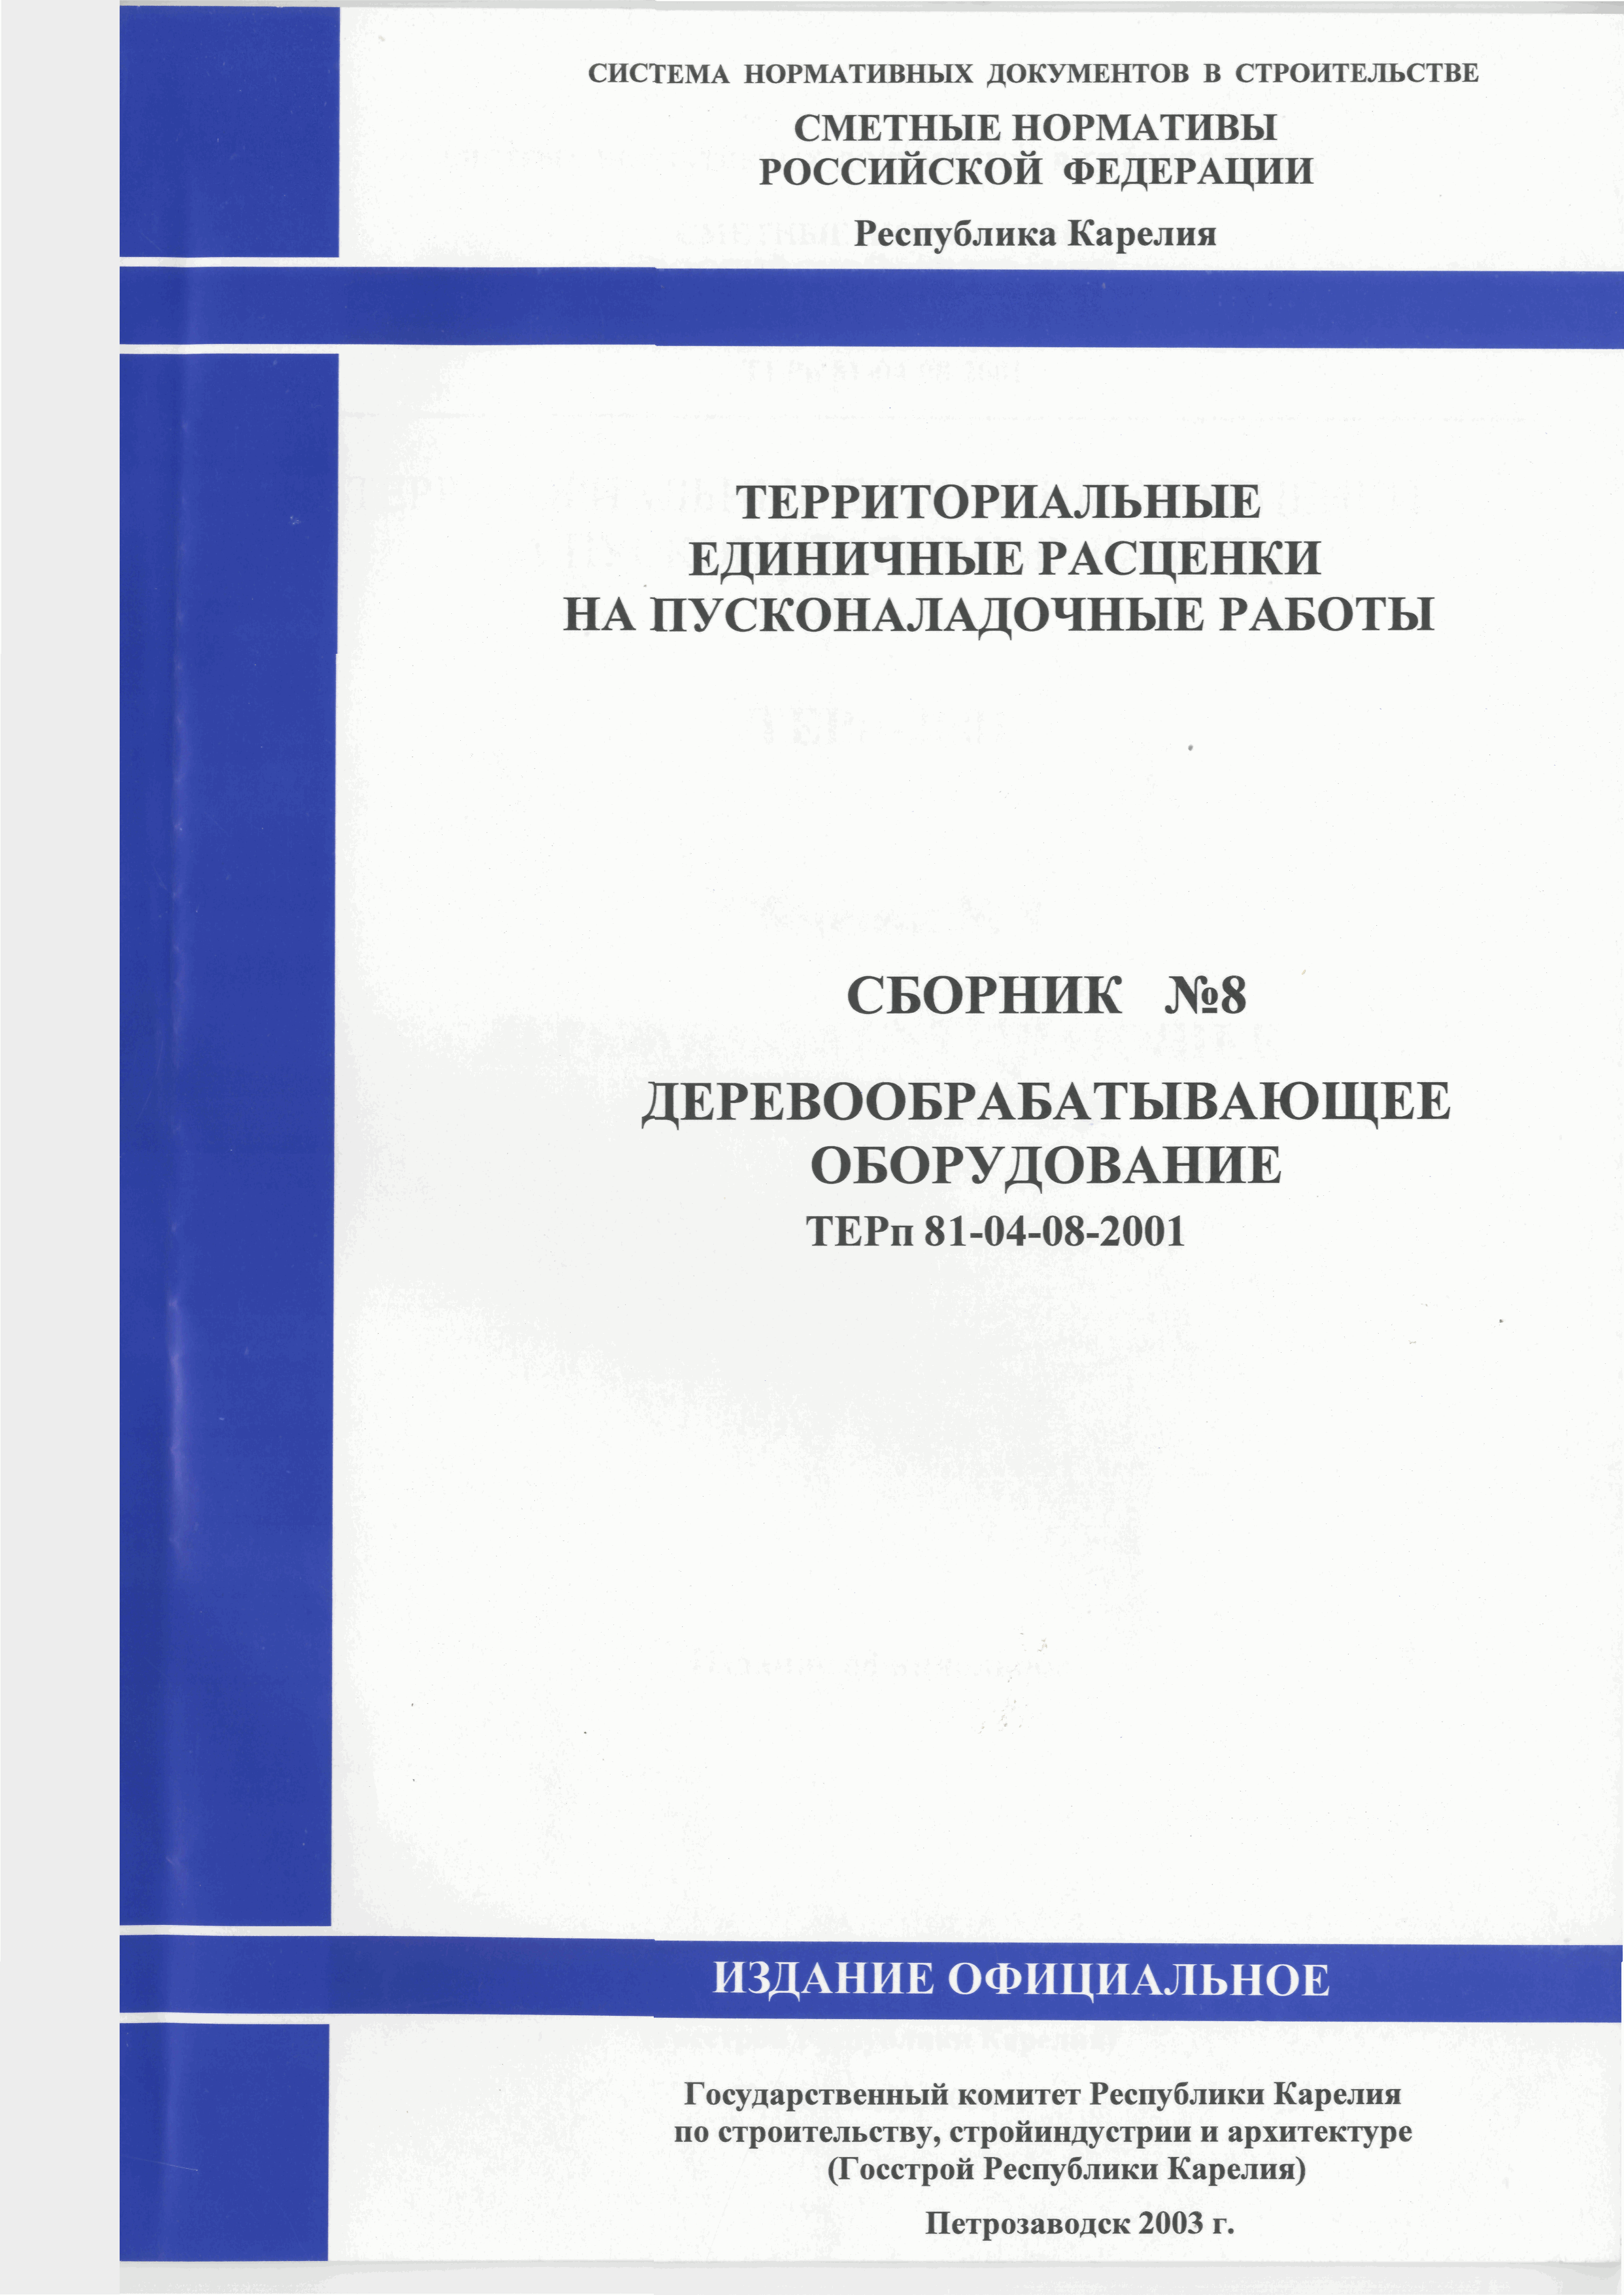 ТЕРп Республика Карелия 2001-08